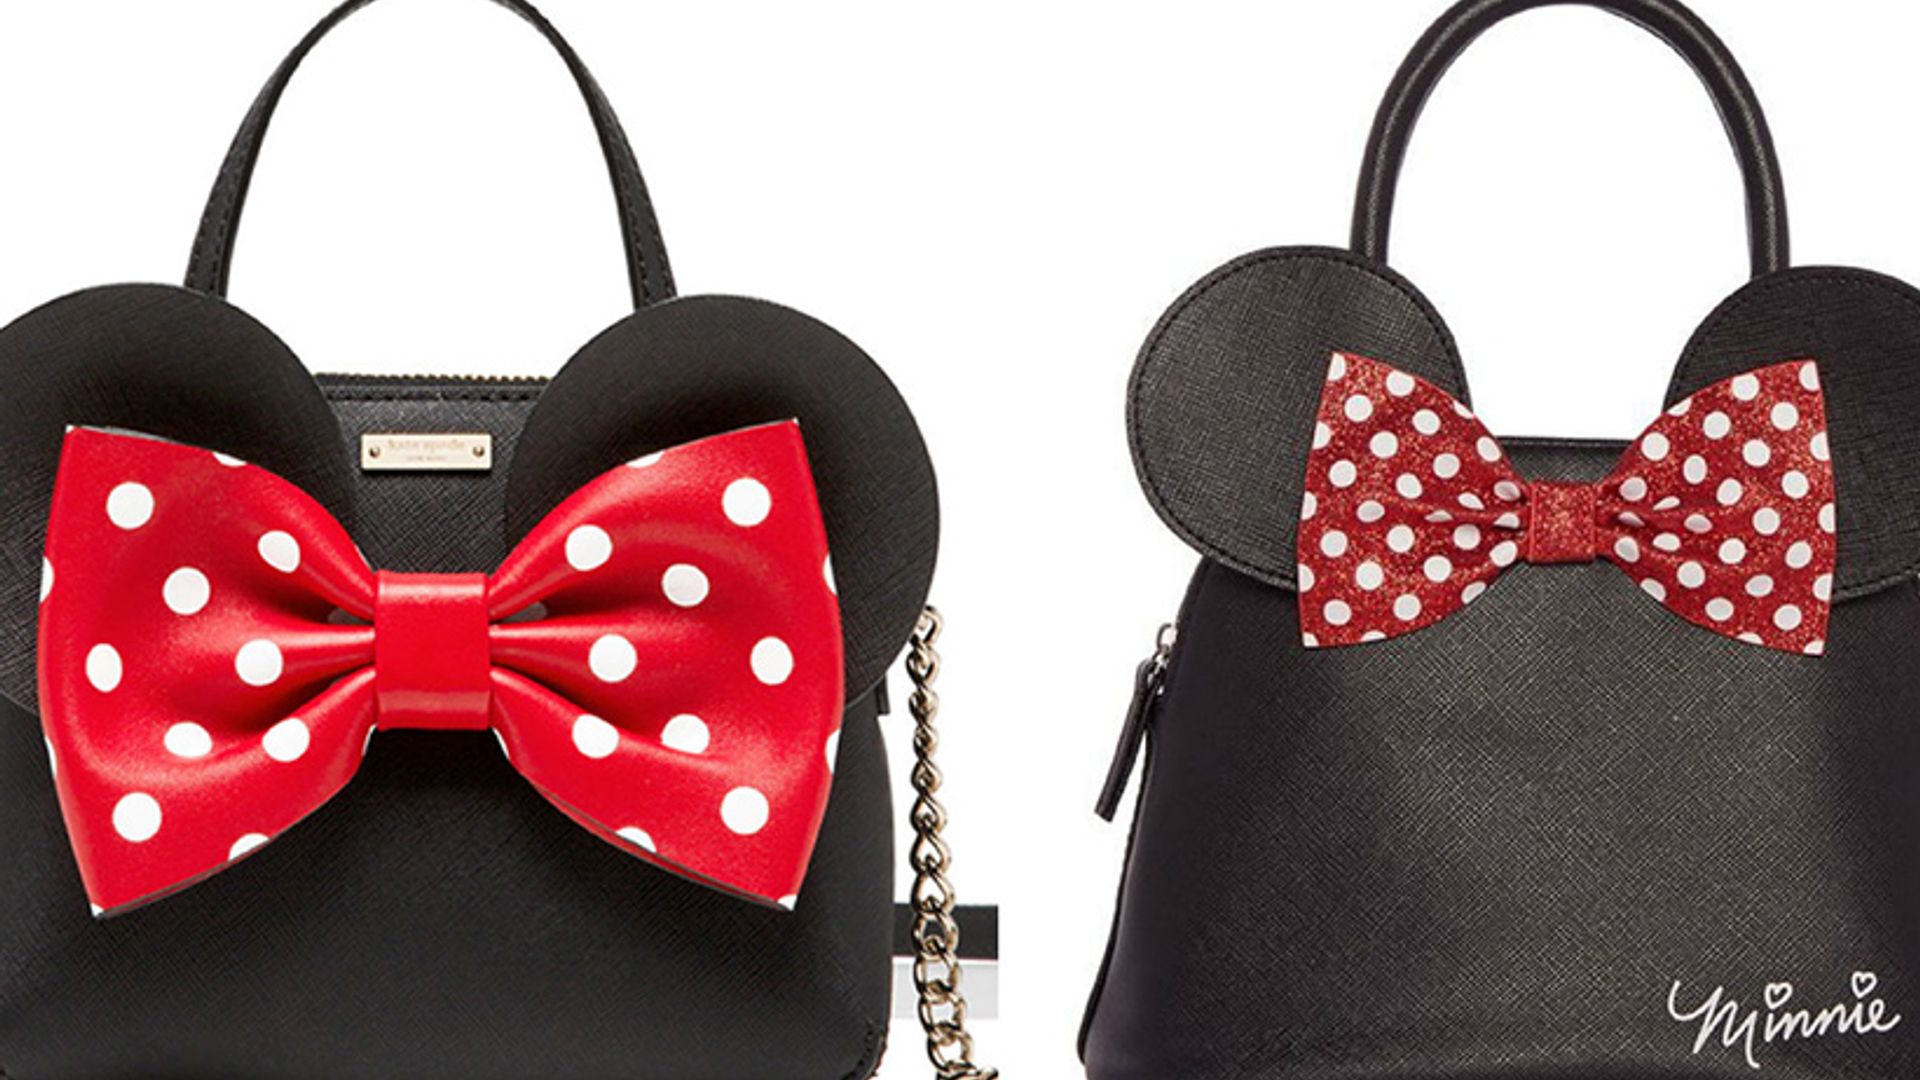 Primark Crossbody Bags & Handbags for Women | eBay